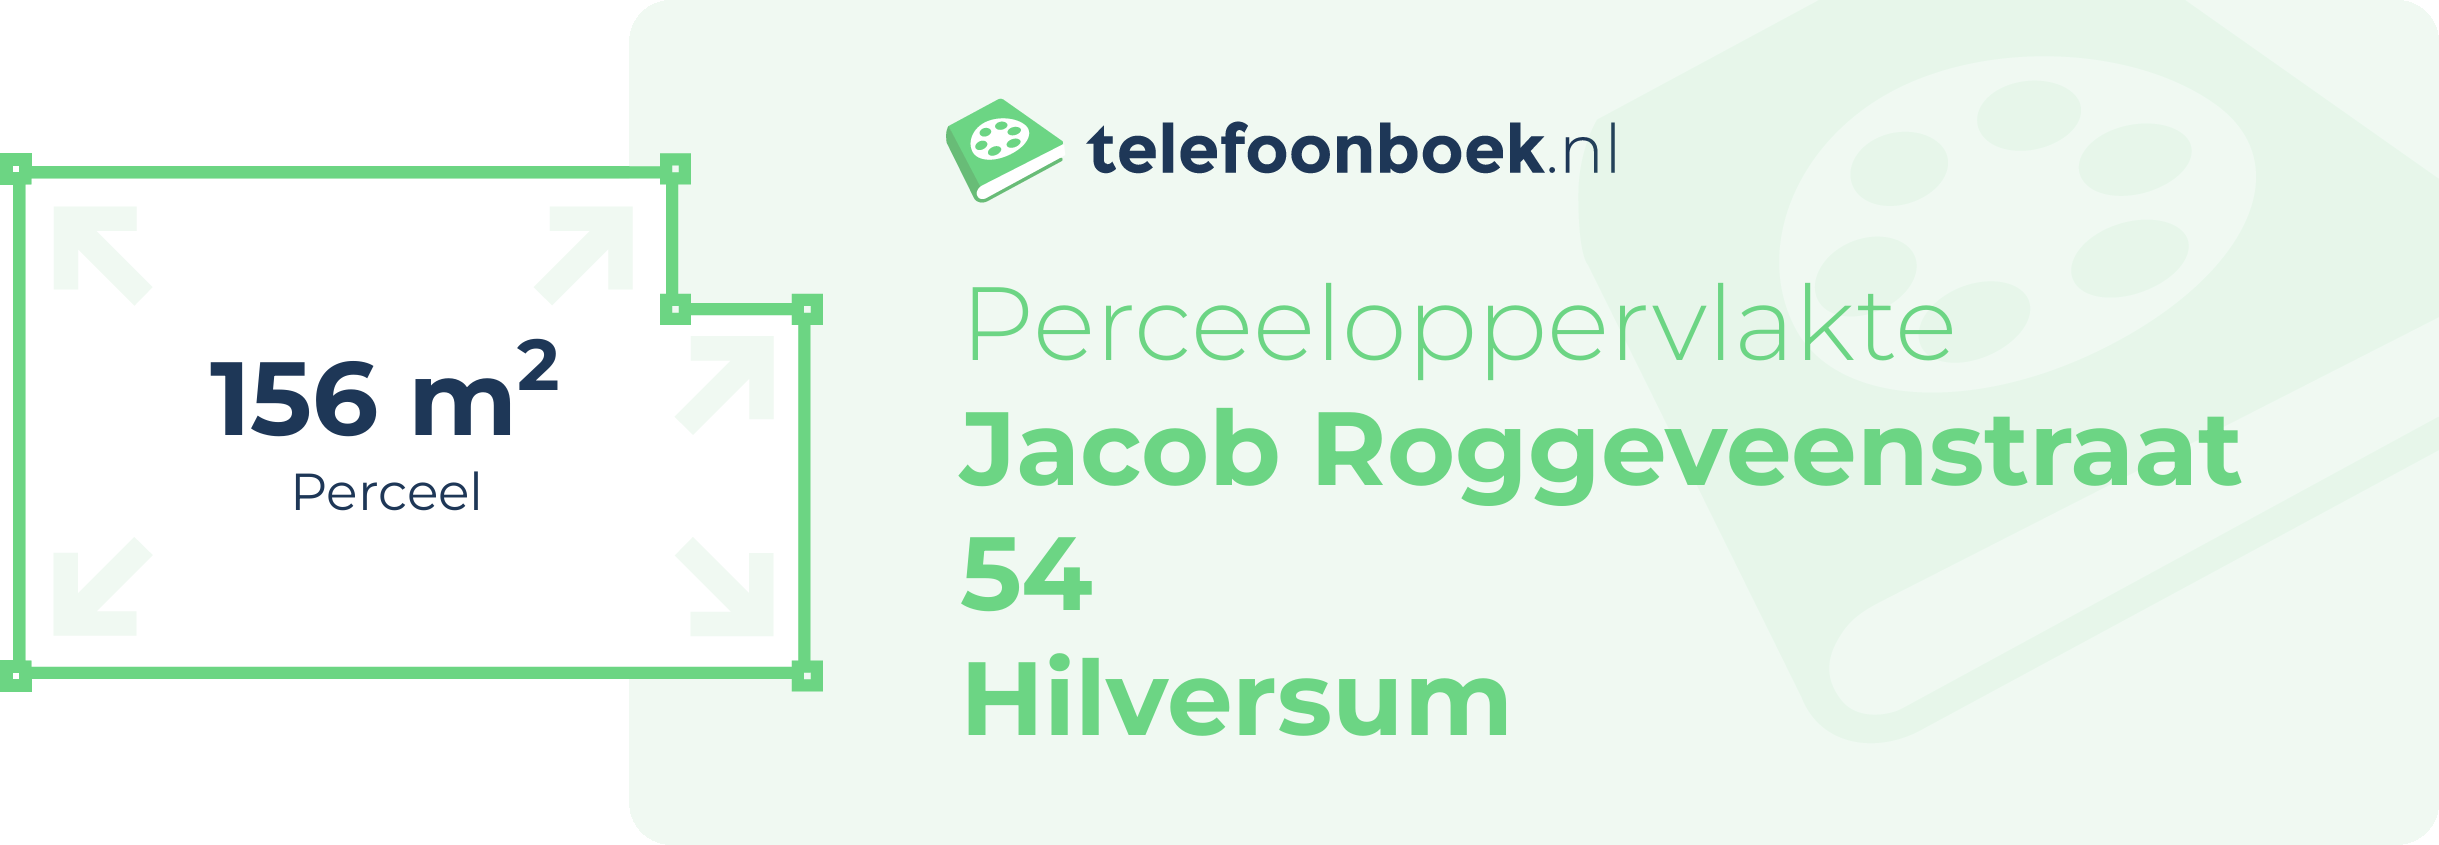 Perceeloppervlakte Jacob Roggeveenstraat 54 Hilversum